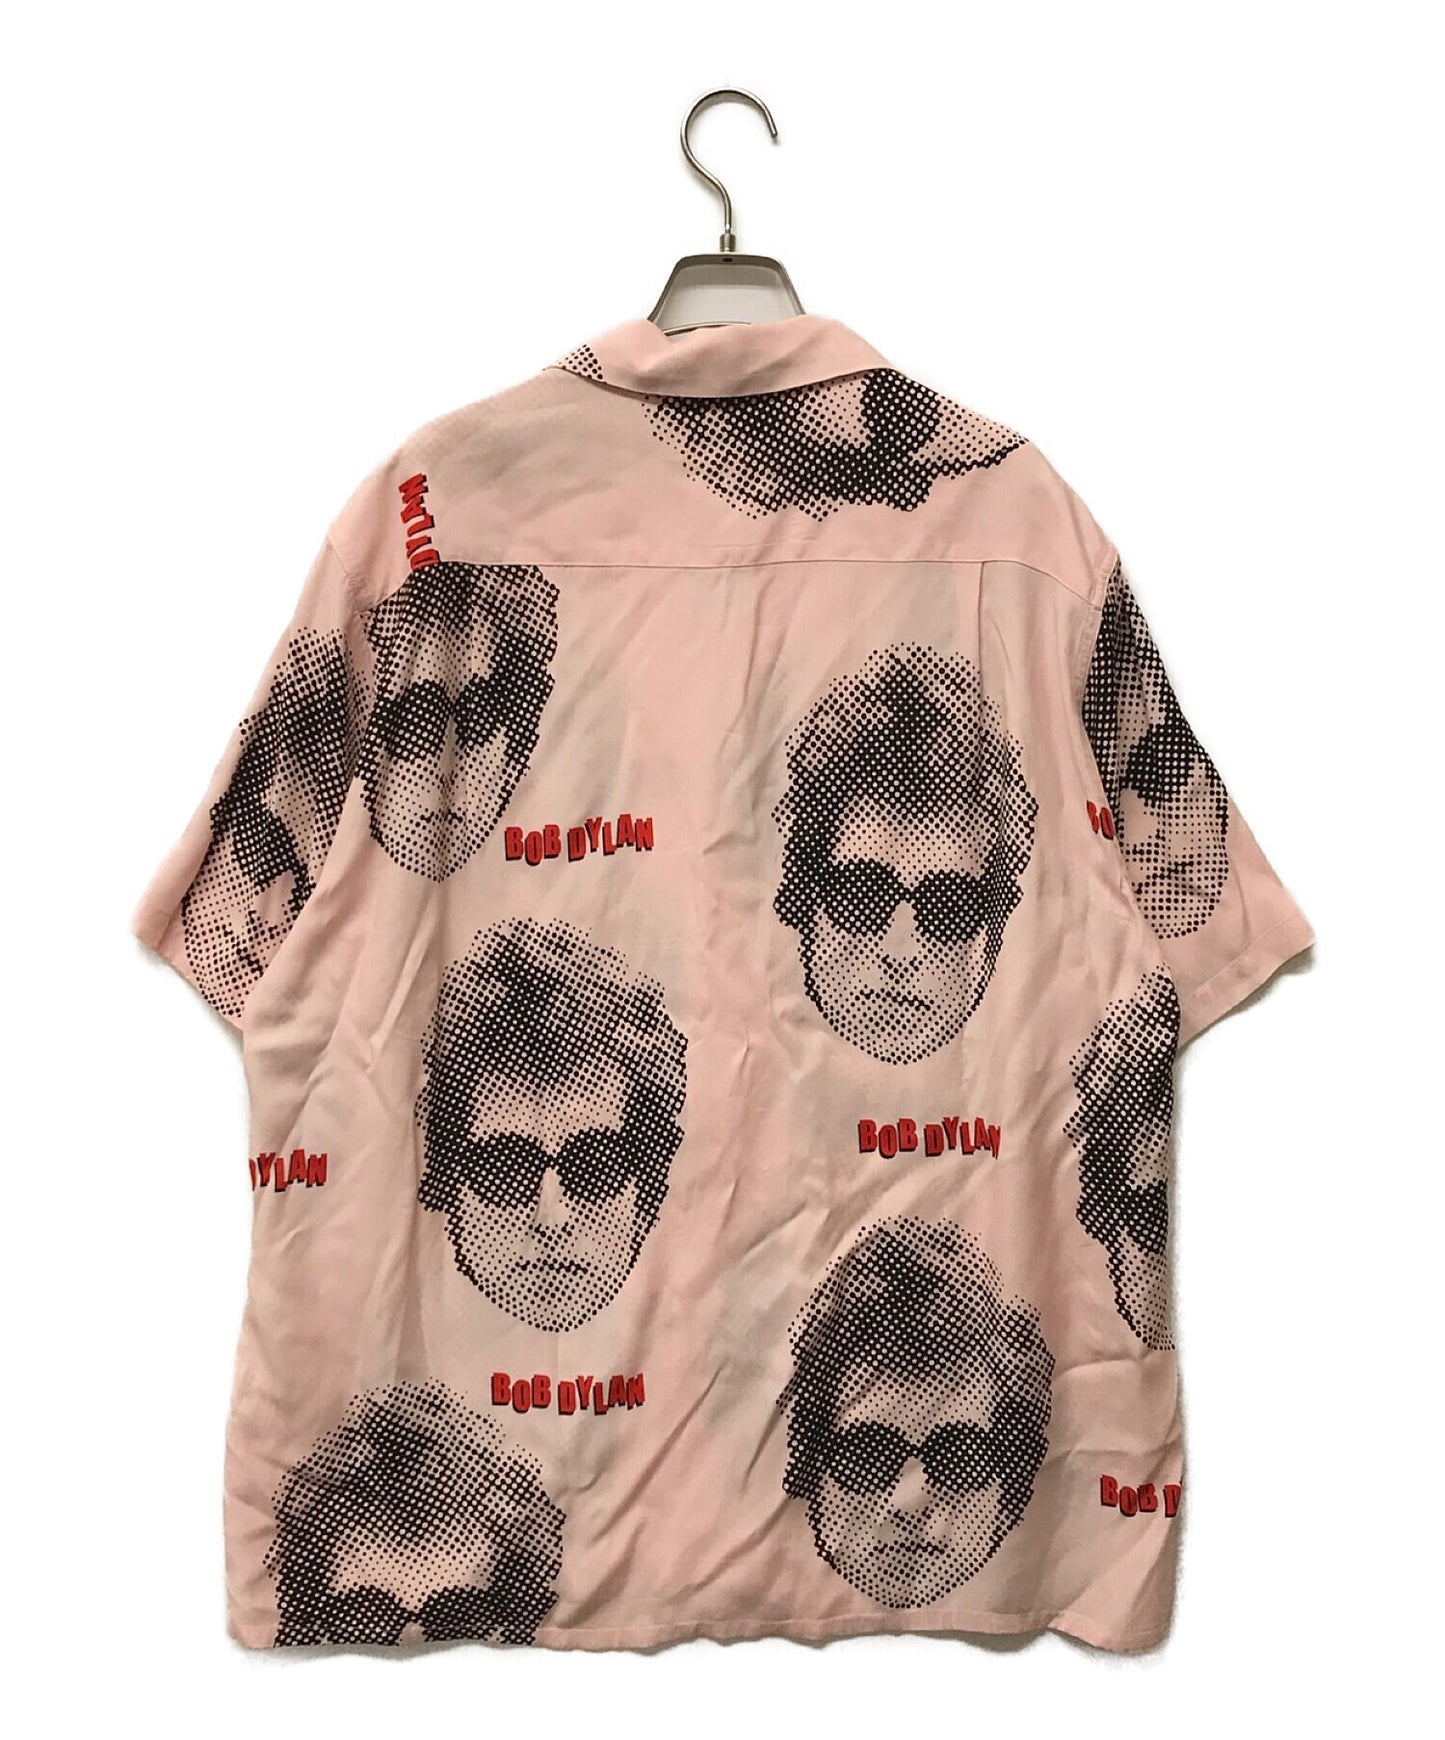 Wacko Maria Bob Dylan S/S夏威夷襯衫